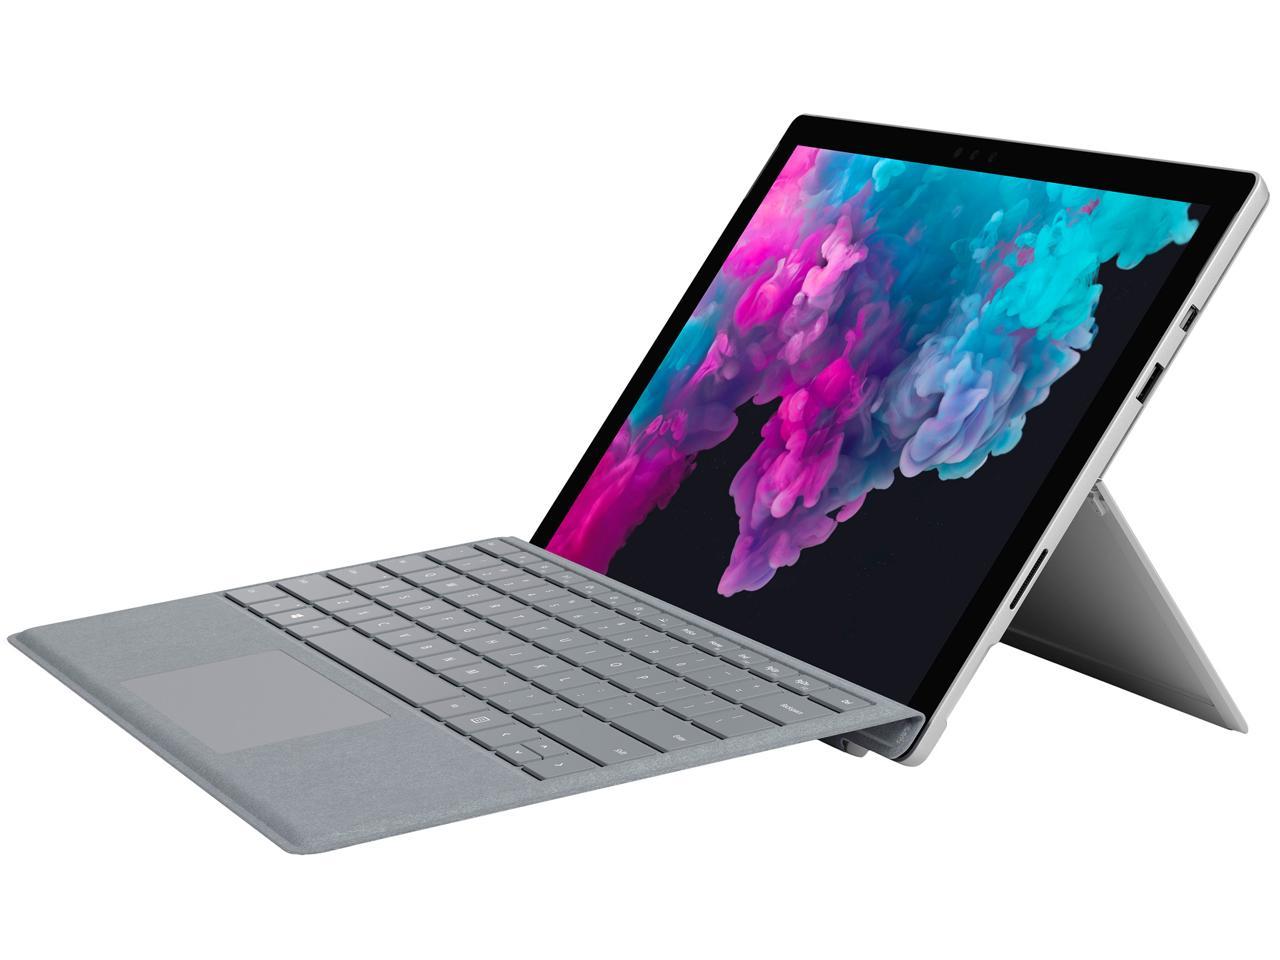 Microsoft Surface Pro 6 LJK-00001 Intel Core i5 8th Gen 8250U (1.60 GHz